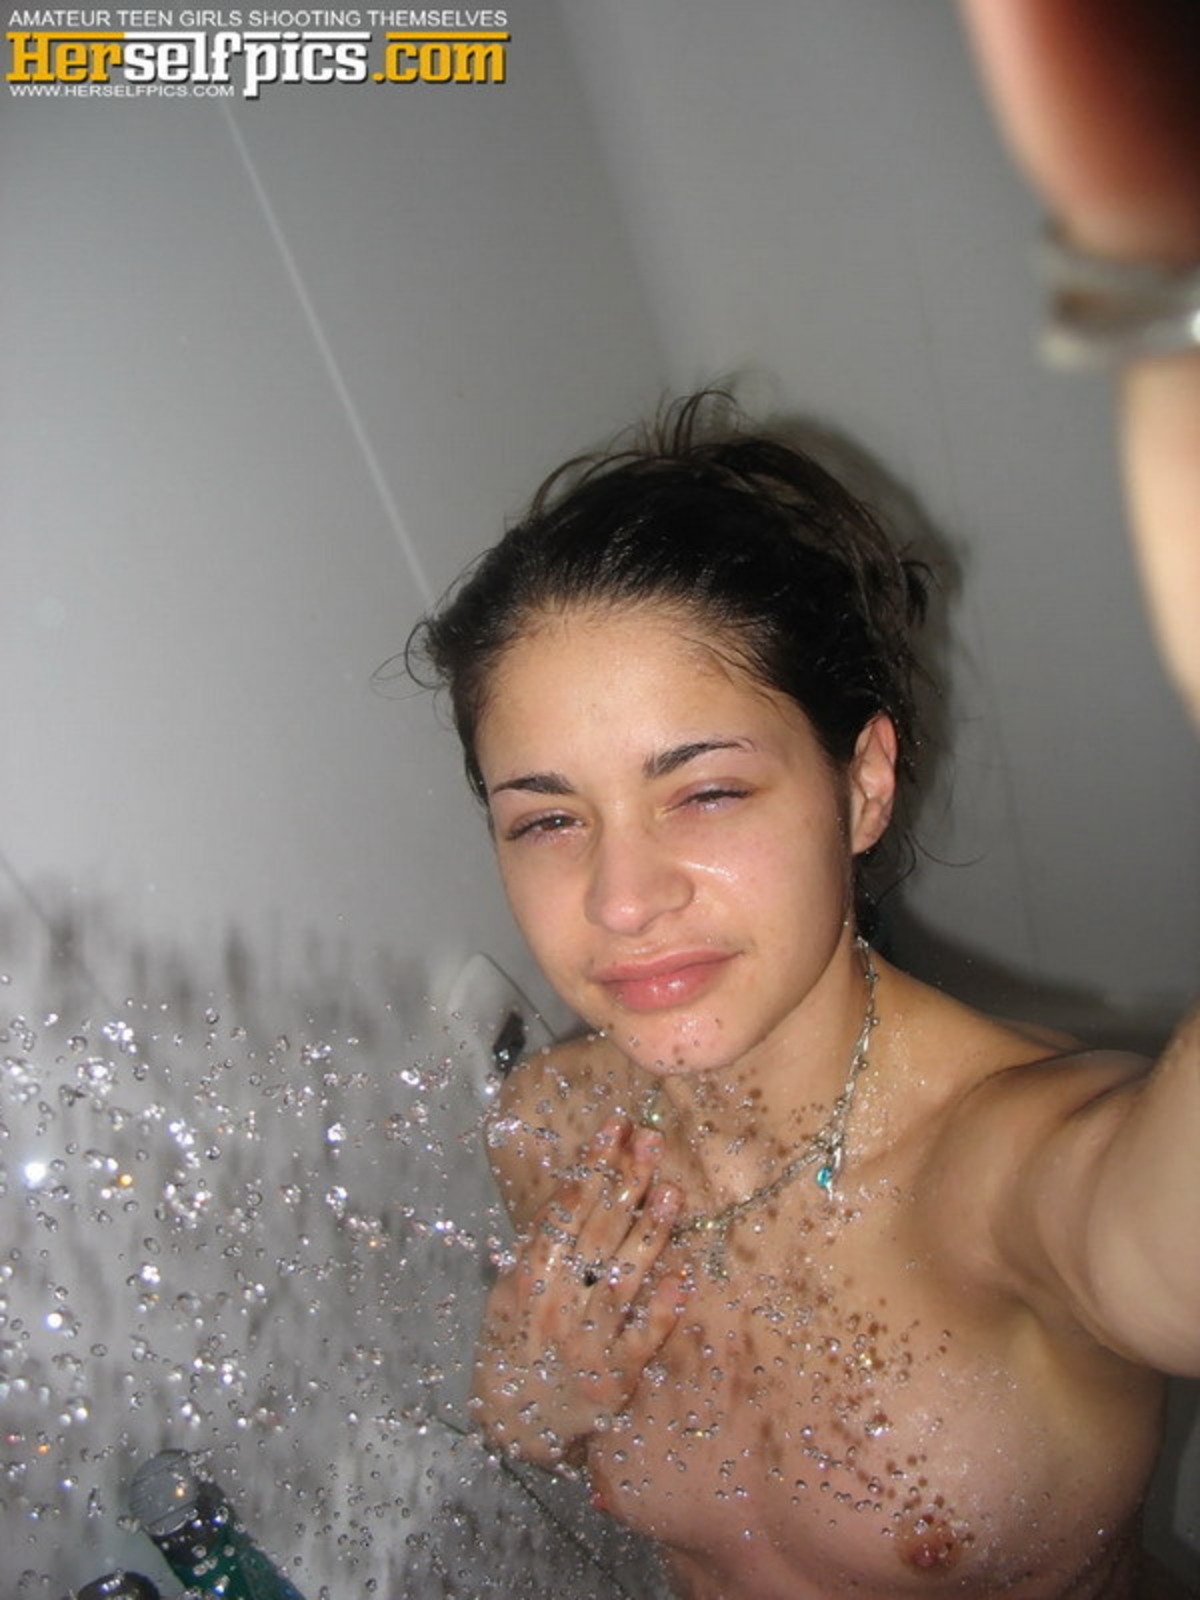 Cute Amateur Taking a Shower - picture 11